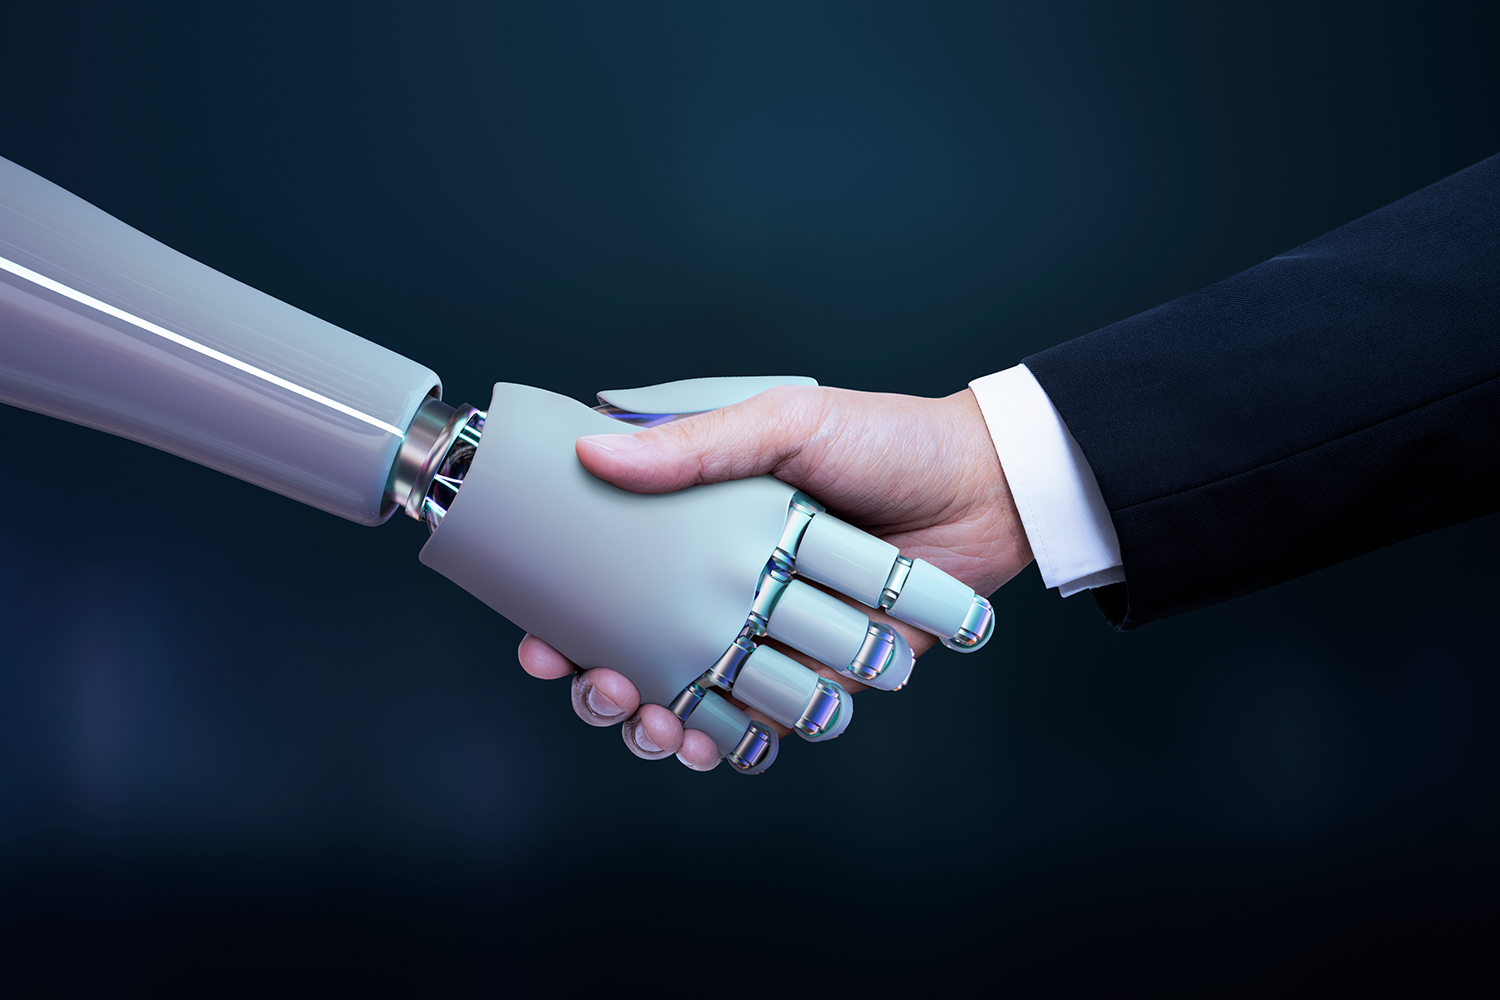 An AI robot hand shaking a human hand.